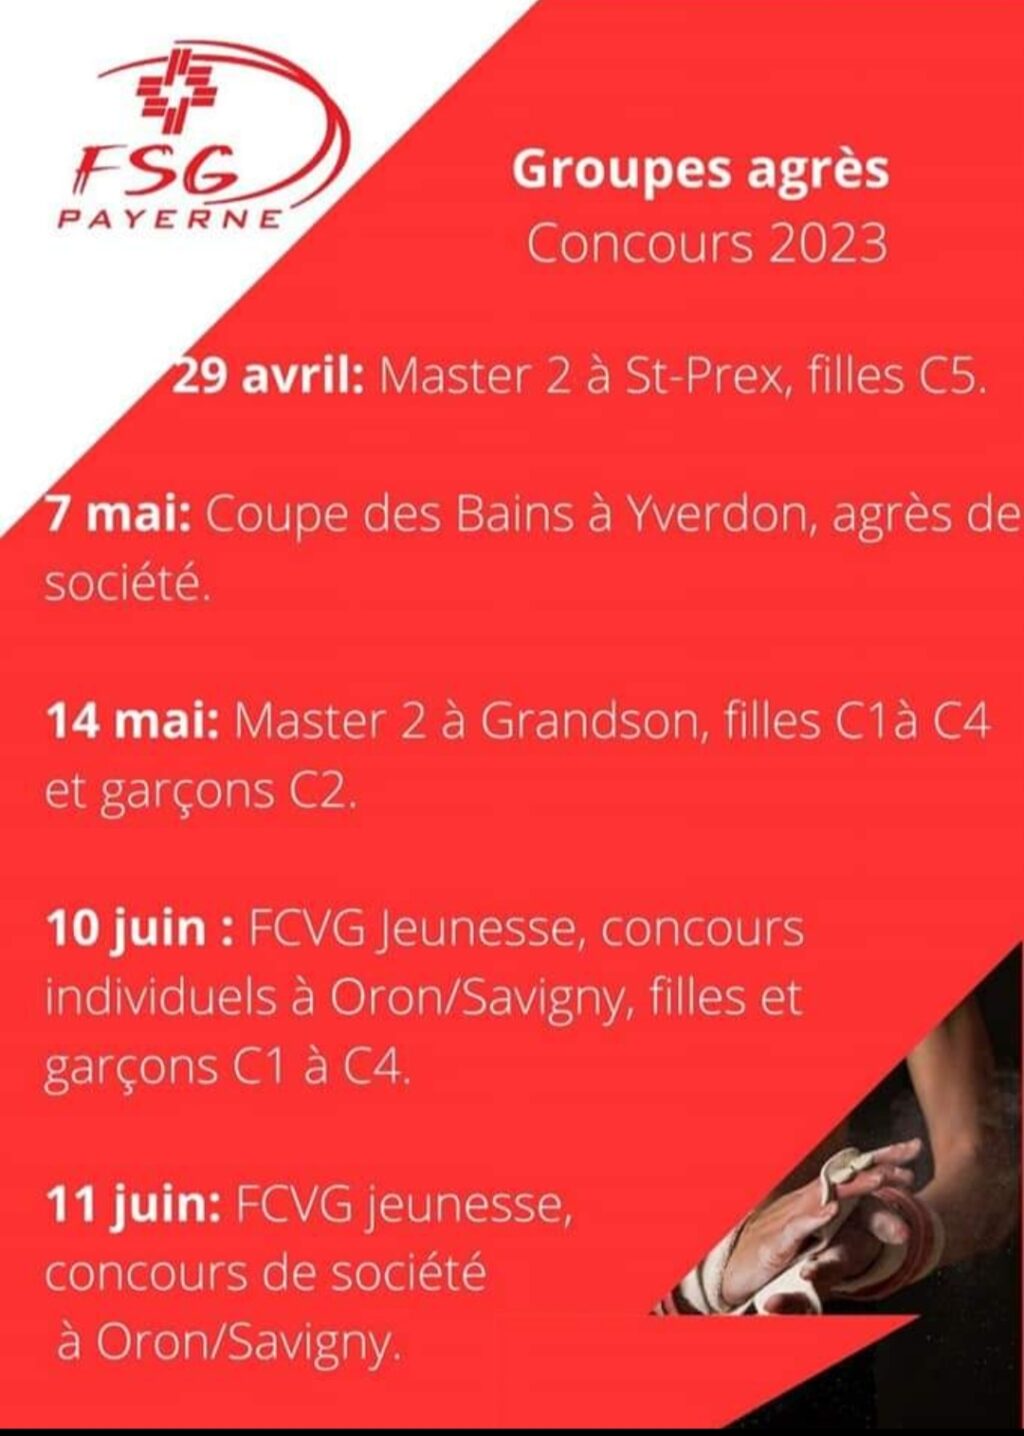 Concours 2023 - Groupes agrès FSG Payerne